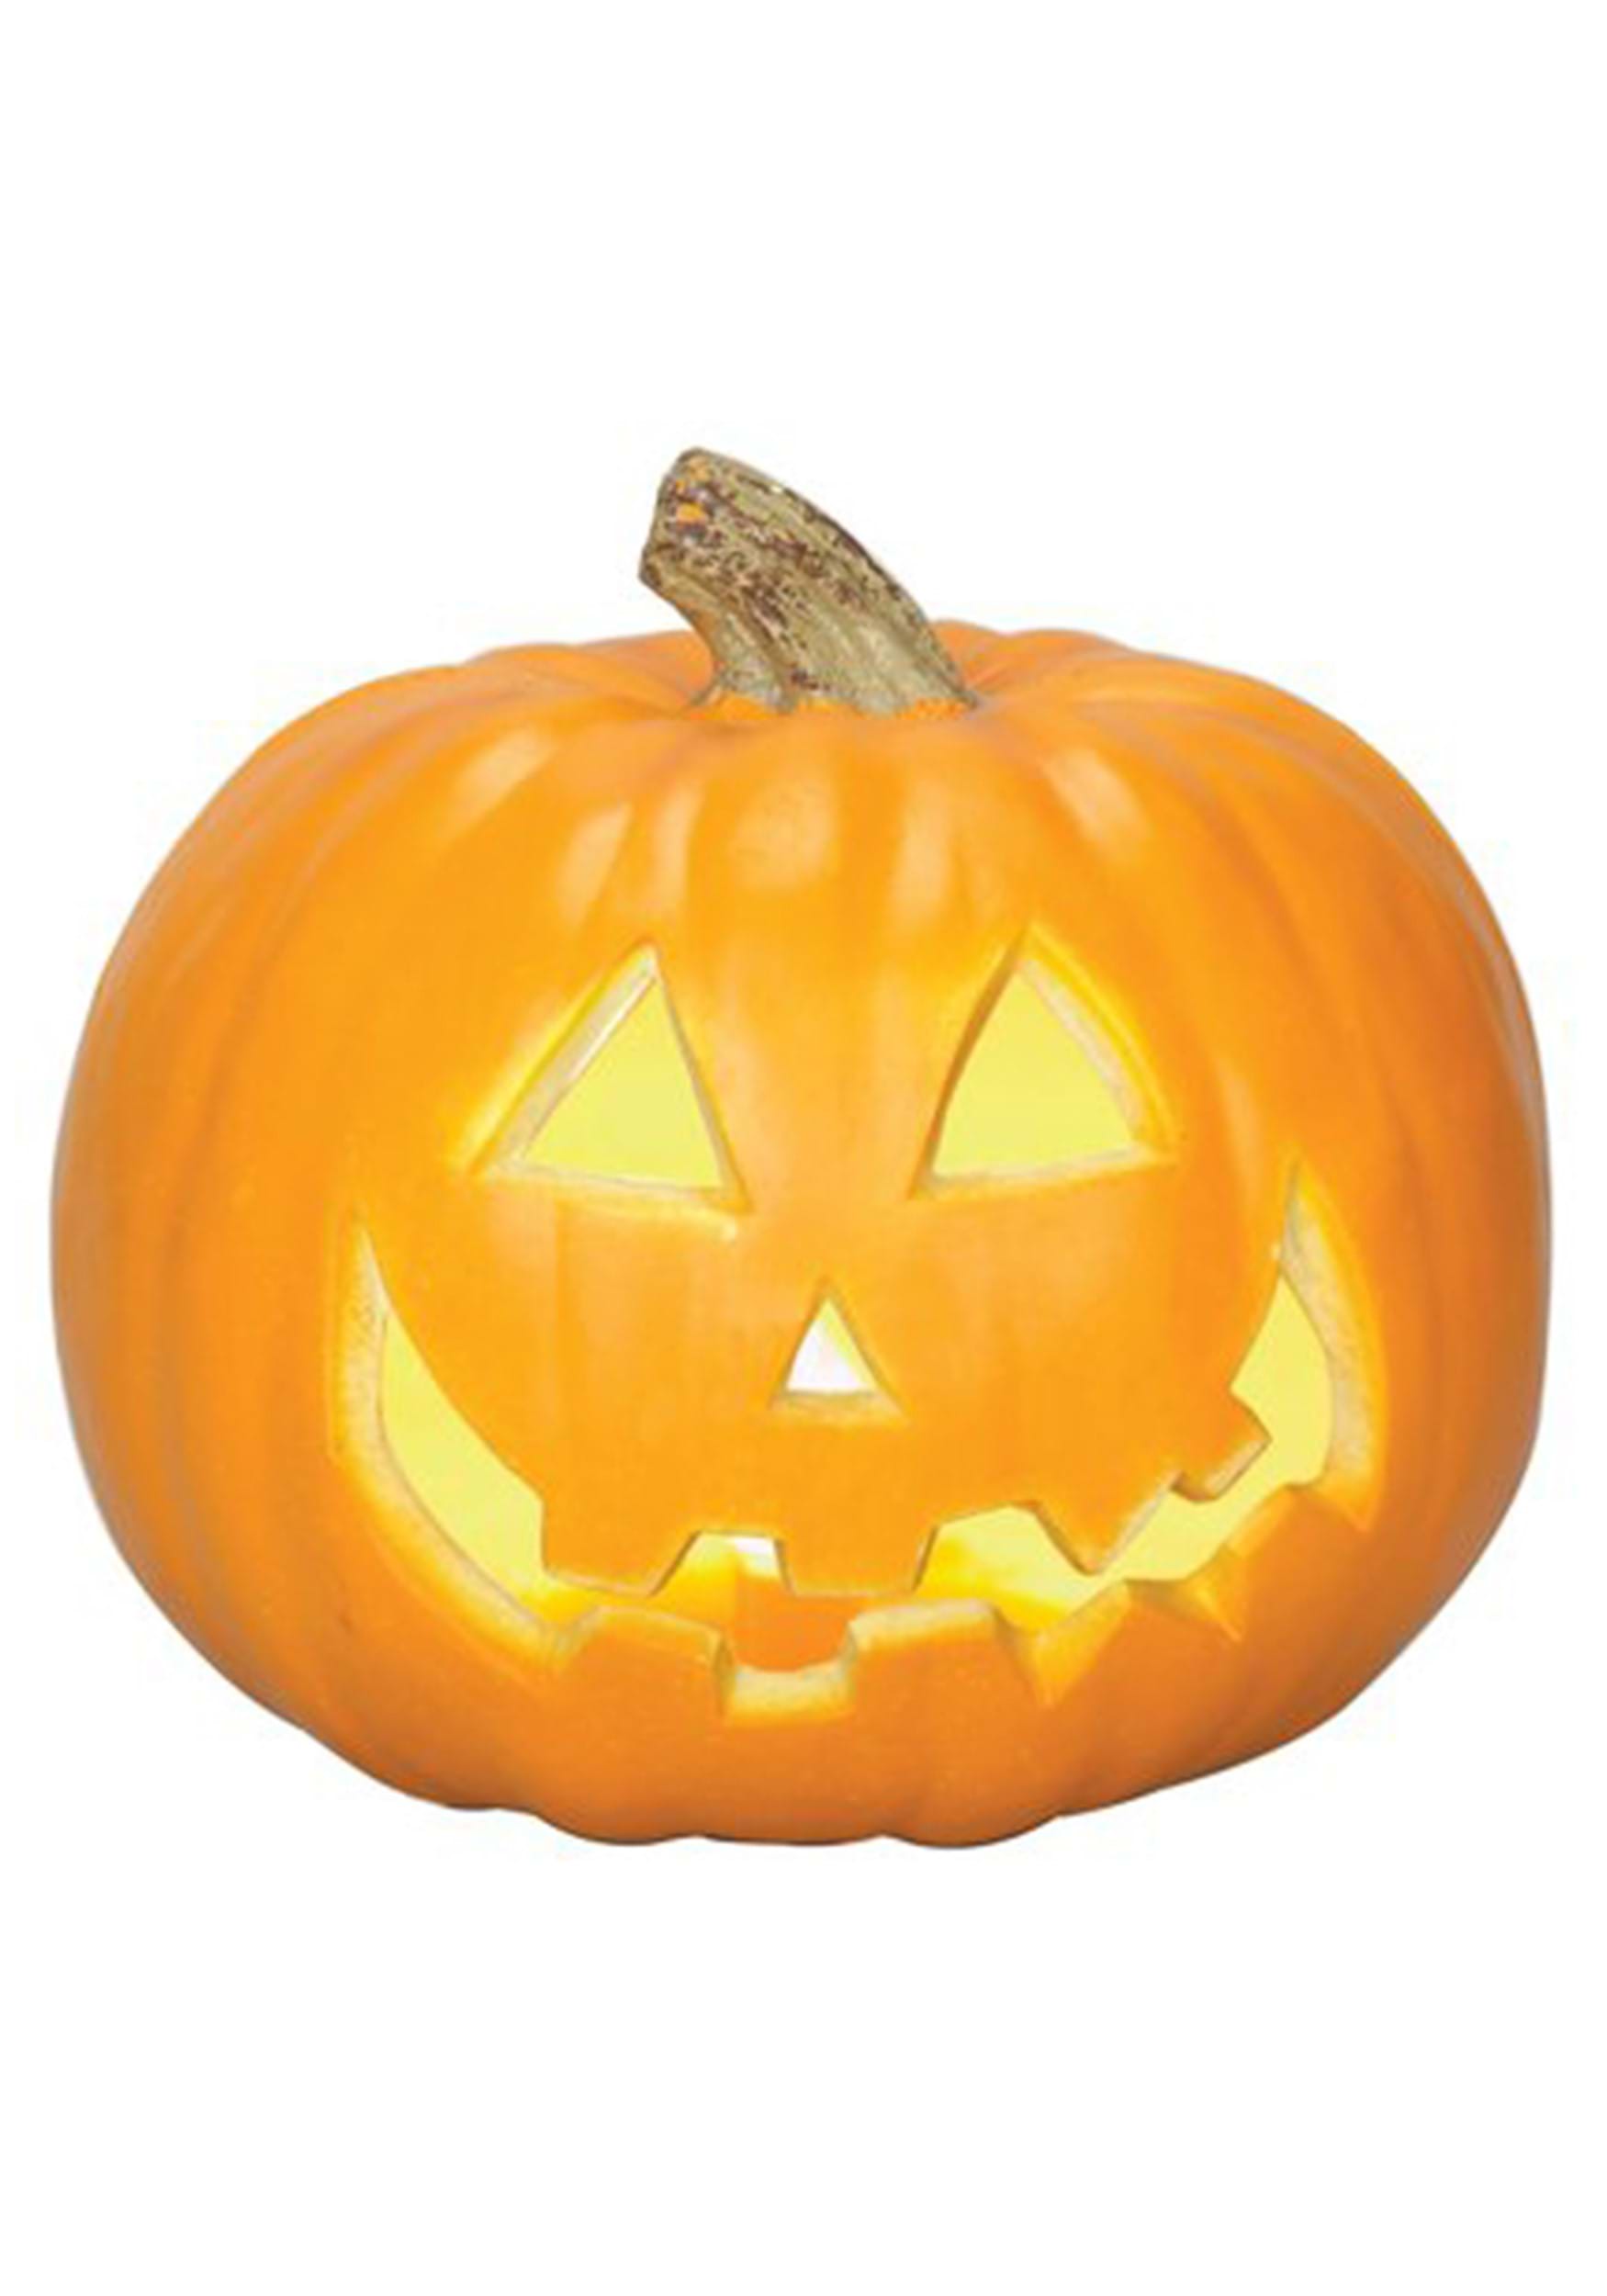 Light Up Traditional Pumpkin - Scary Jack O Lantern Decoration